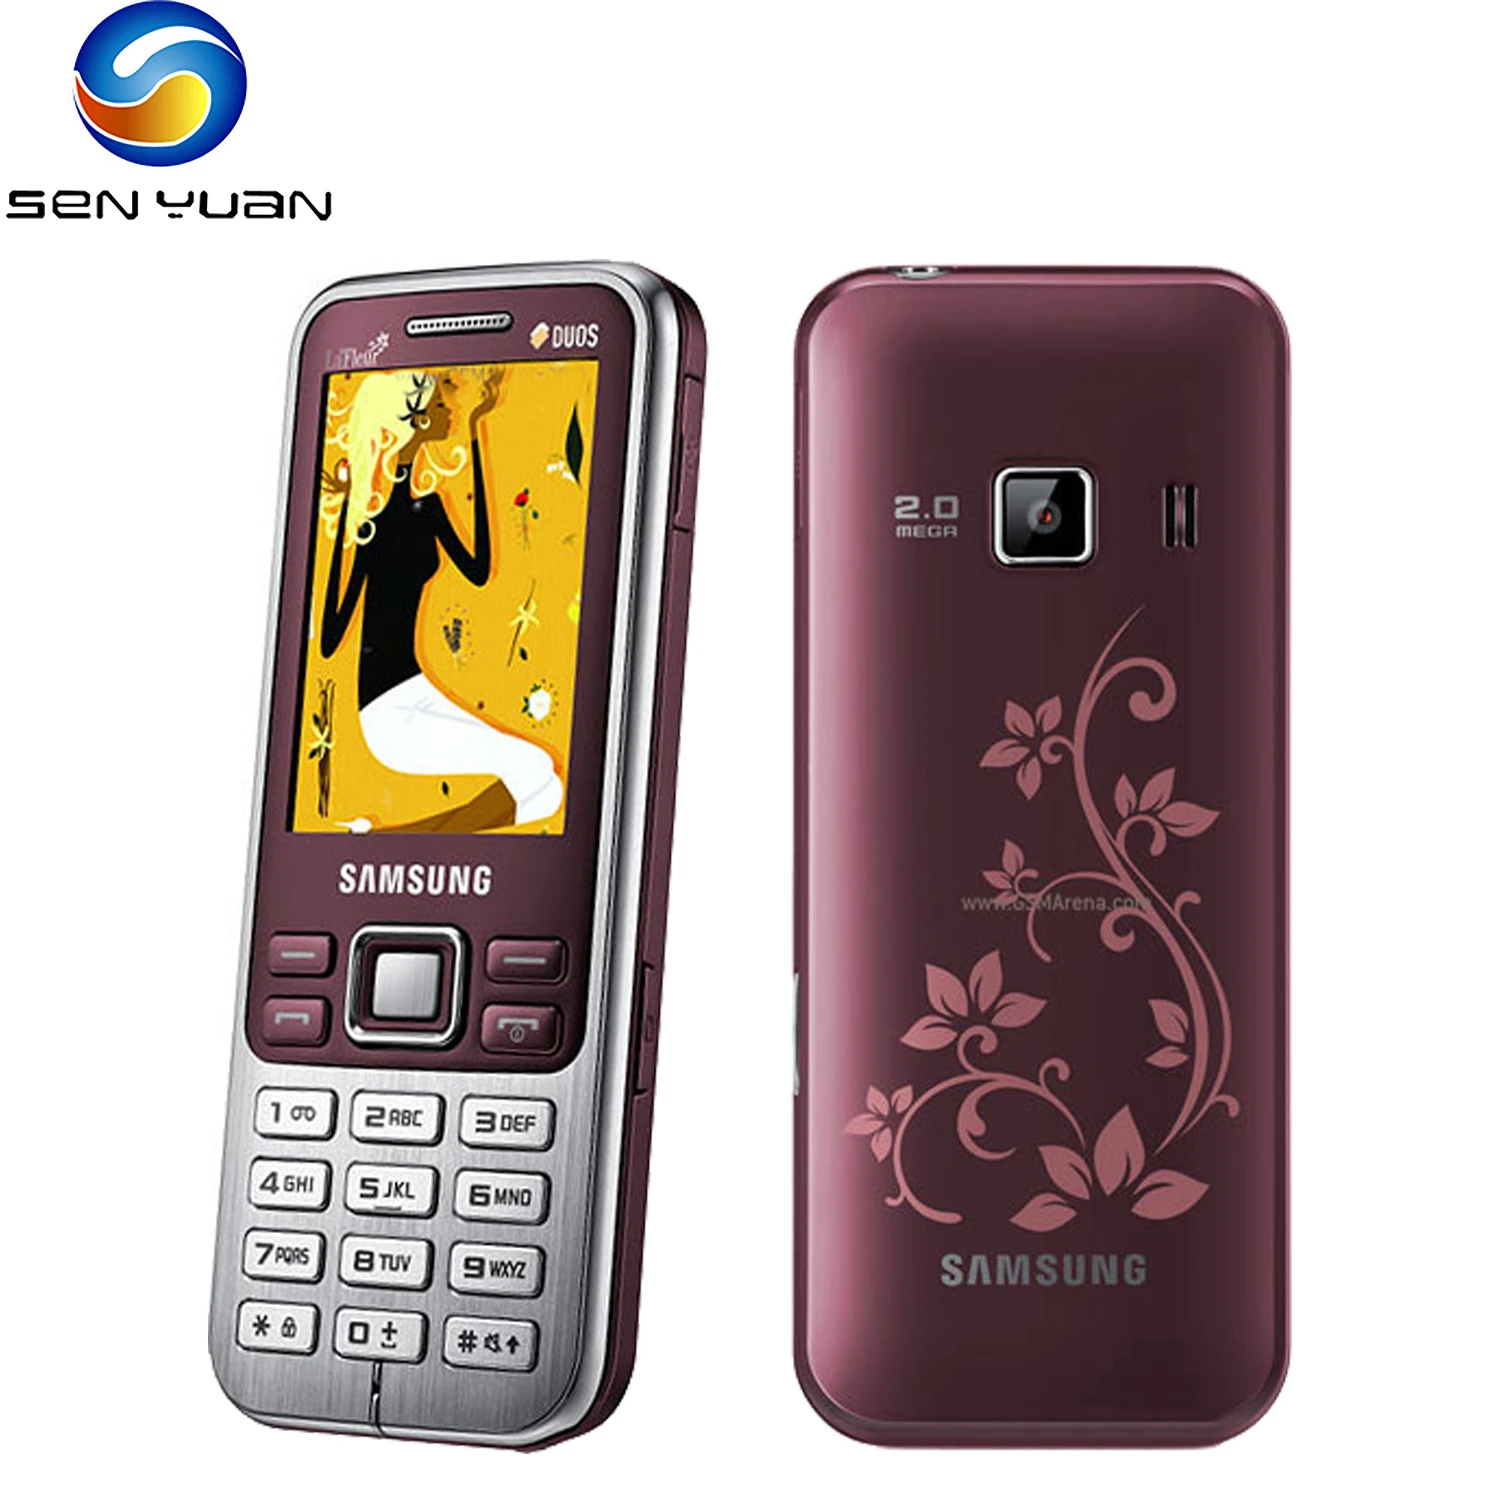 iphone 12 refurbished Original Samsung C3322 2G GSM Mobile Phone Refurbished 2.2" Display Dual SIM Card 2MP Camera FM Radio Bluetooth Cellphone iphone xr refurbished